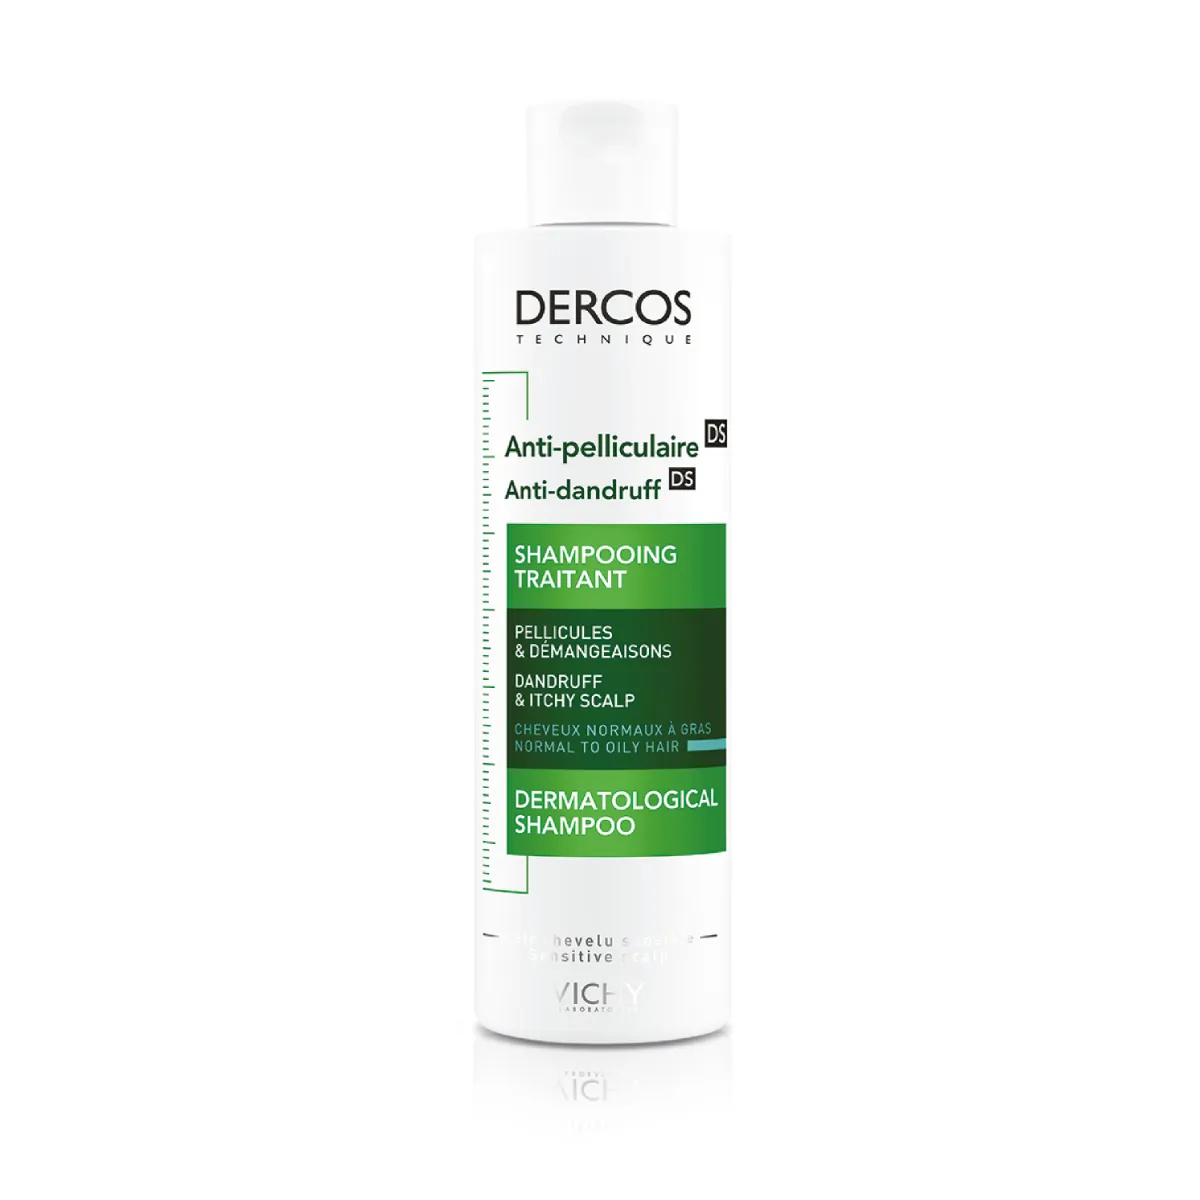 vichy-dercos-technique-shampooing-anti-pelliculaire-cheveux-gras-200-ml-3337871330286